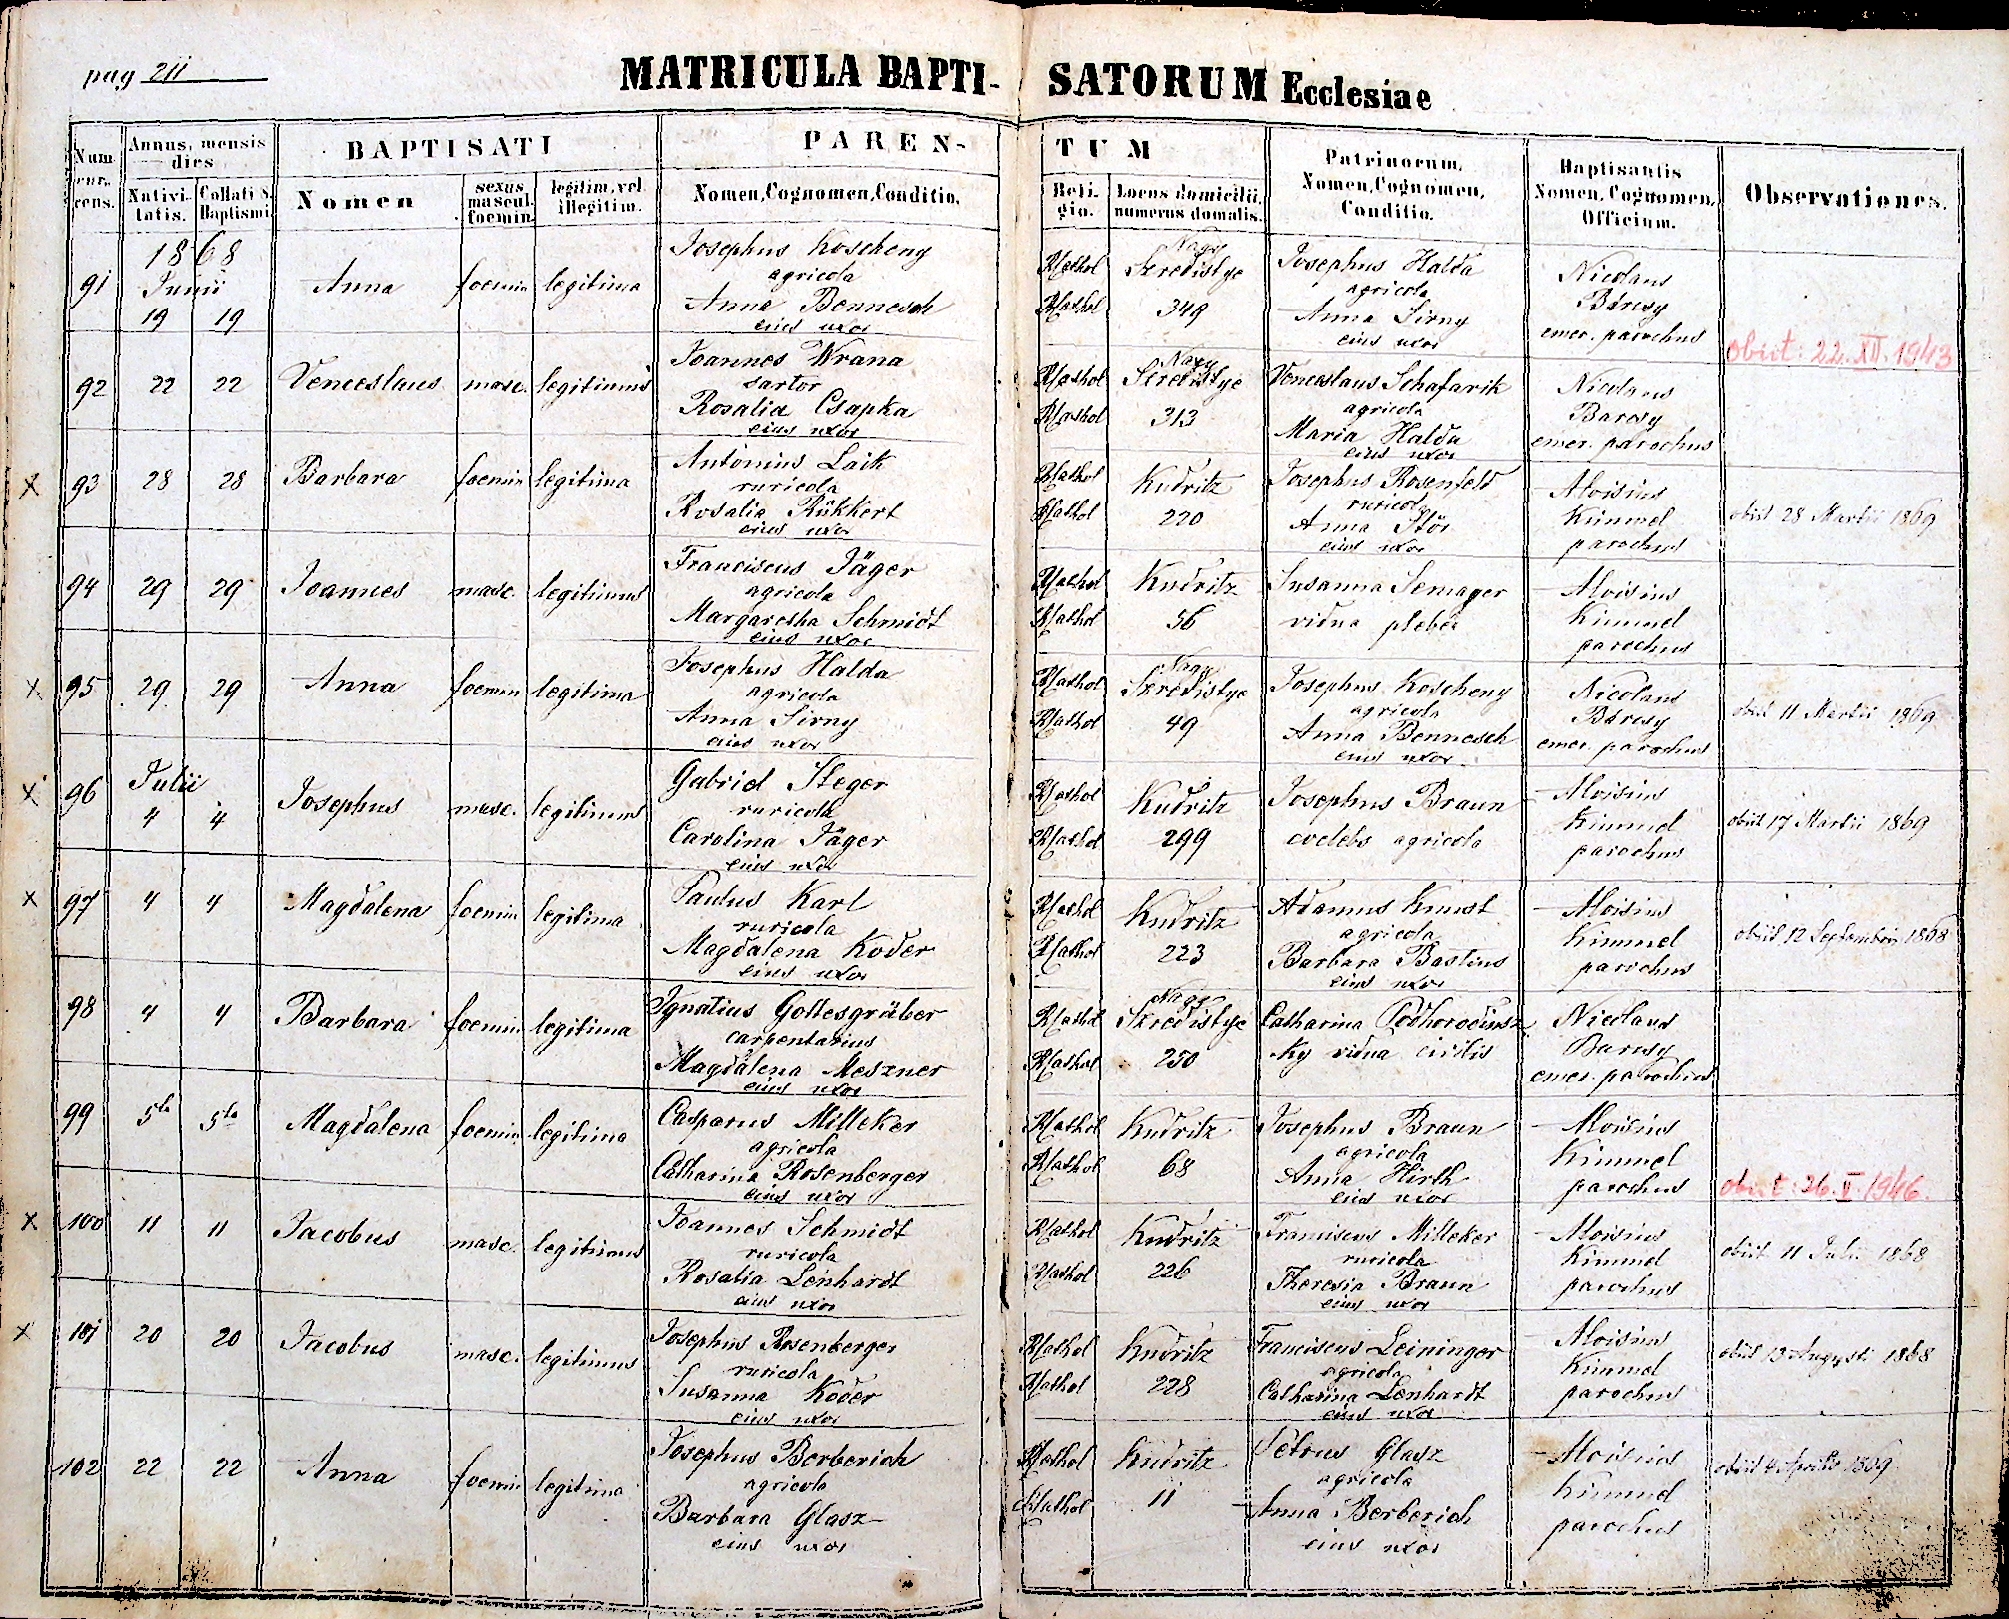 images/church_records/BIRTHS/1852-1870B/211